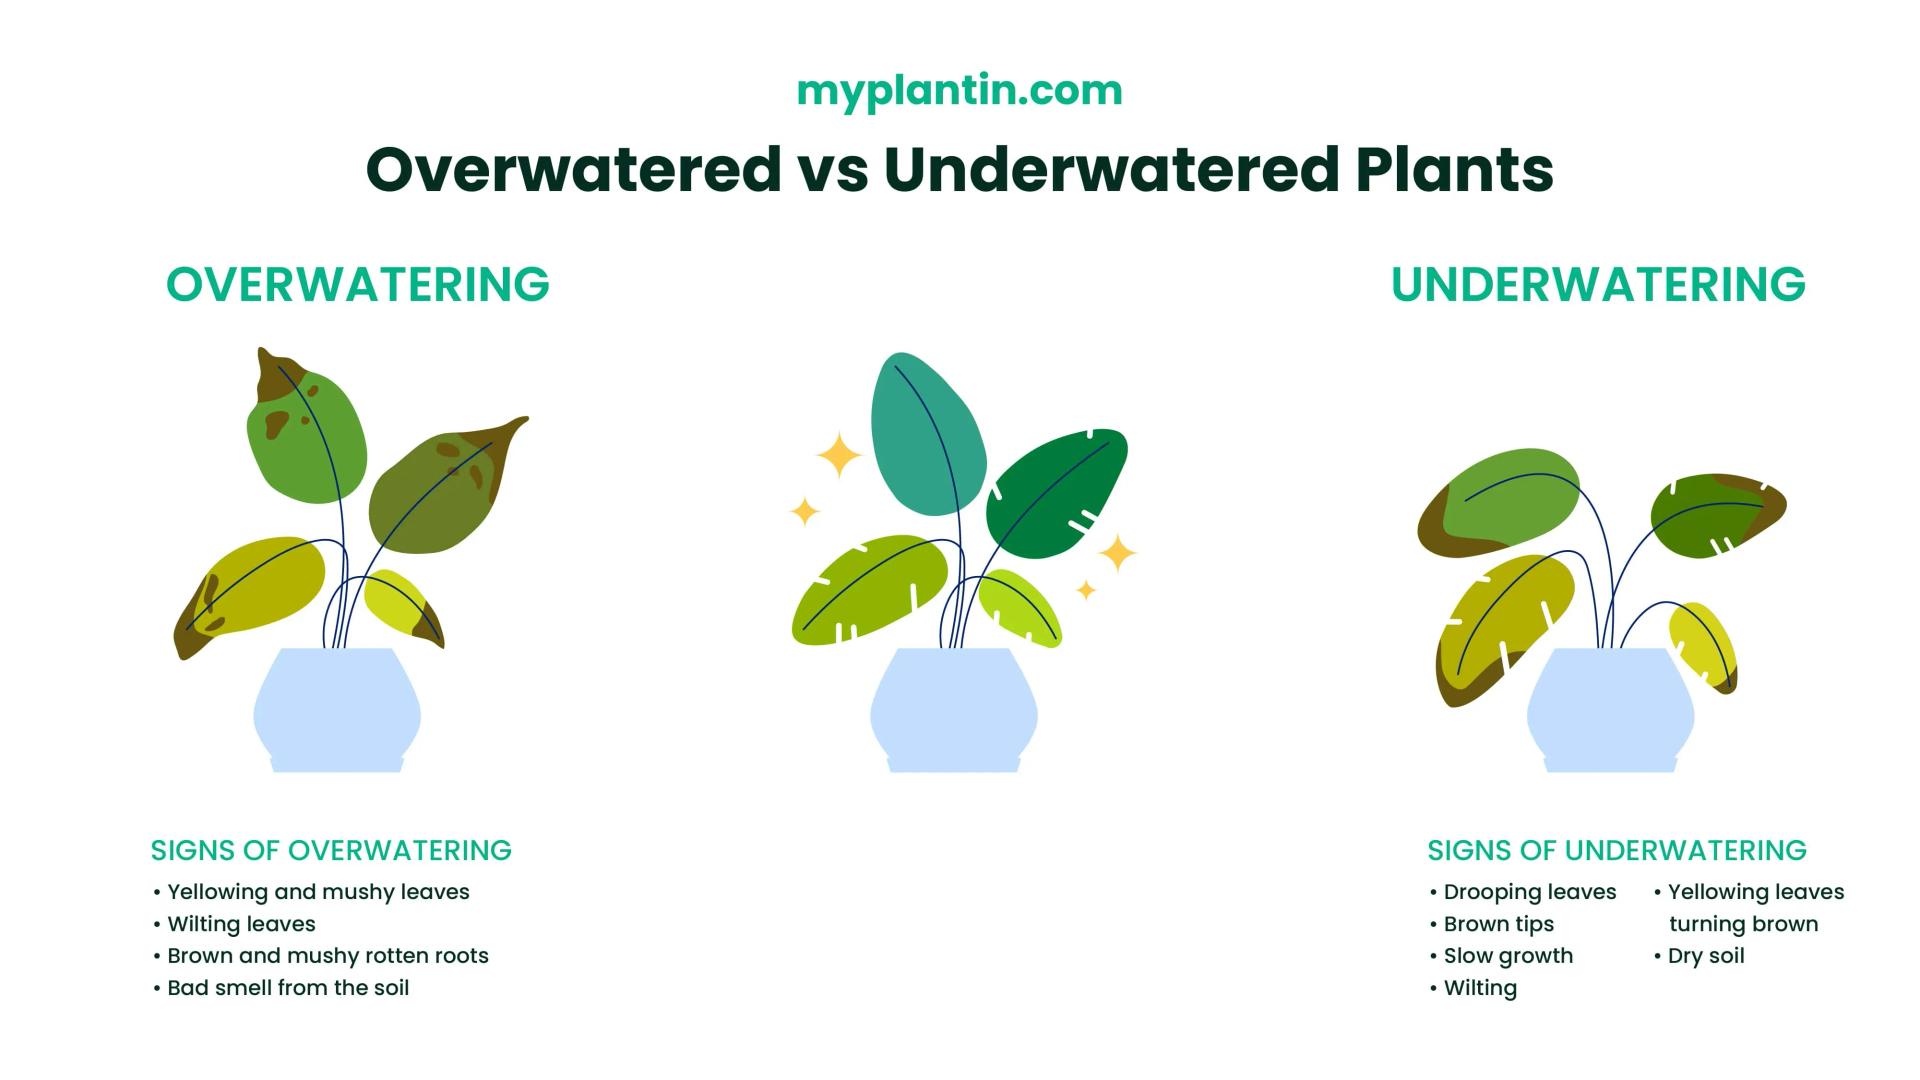 Overwatered vs. Underwatred Signs in Plants